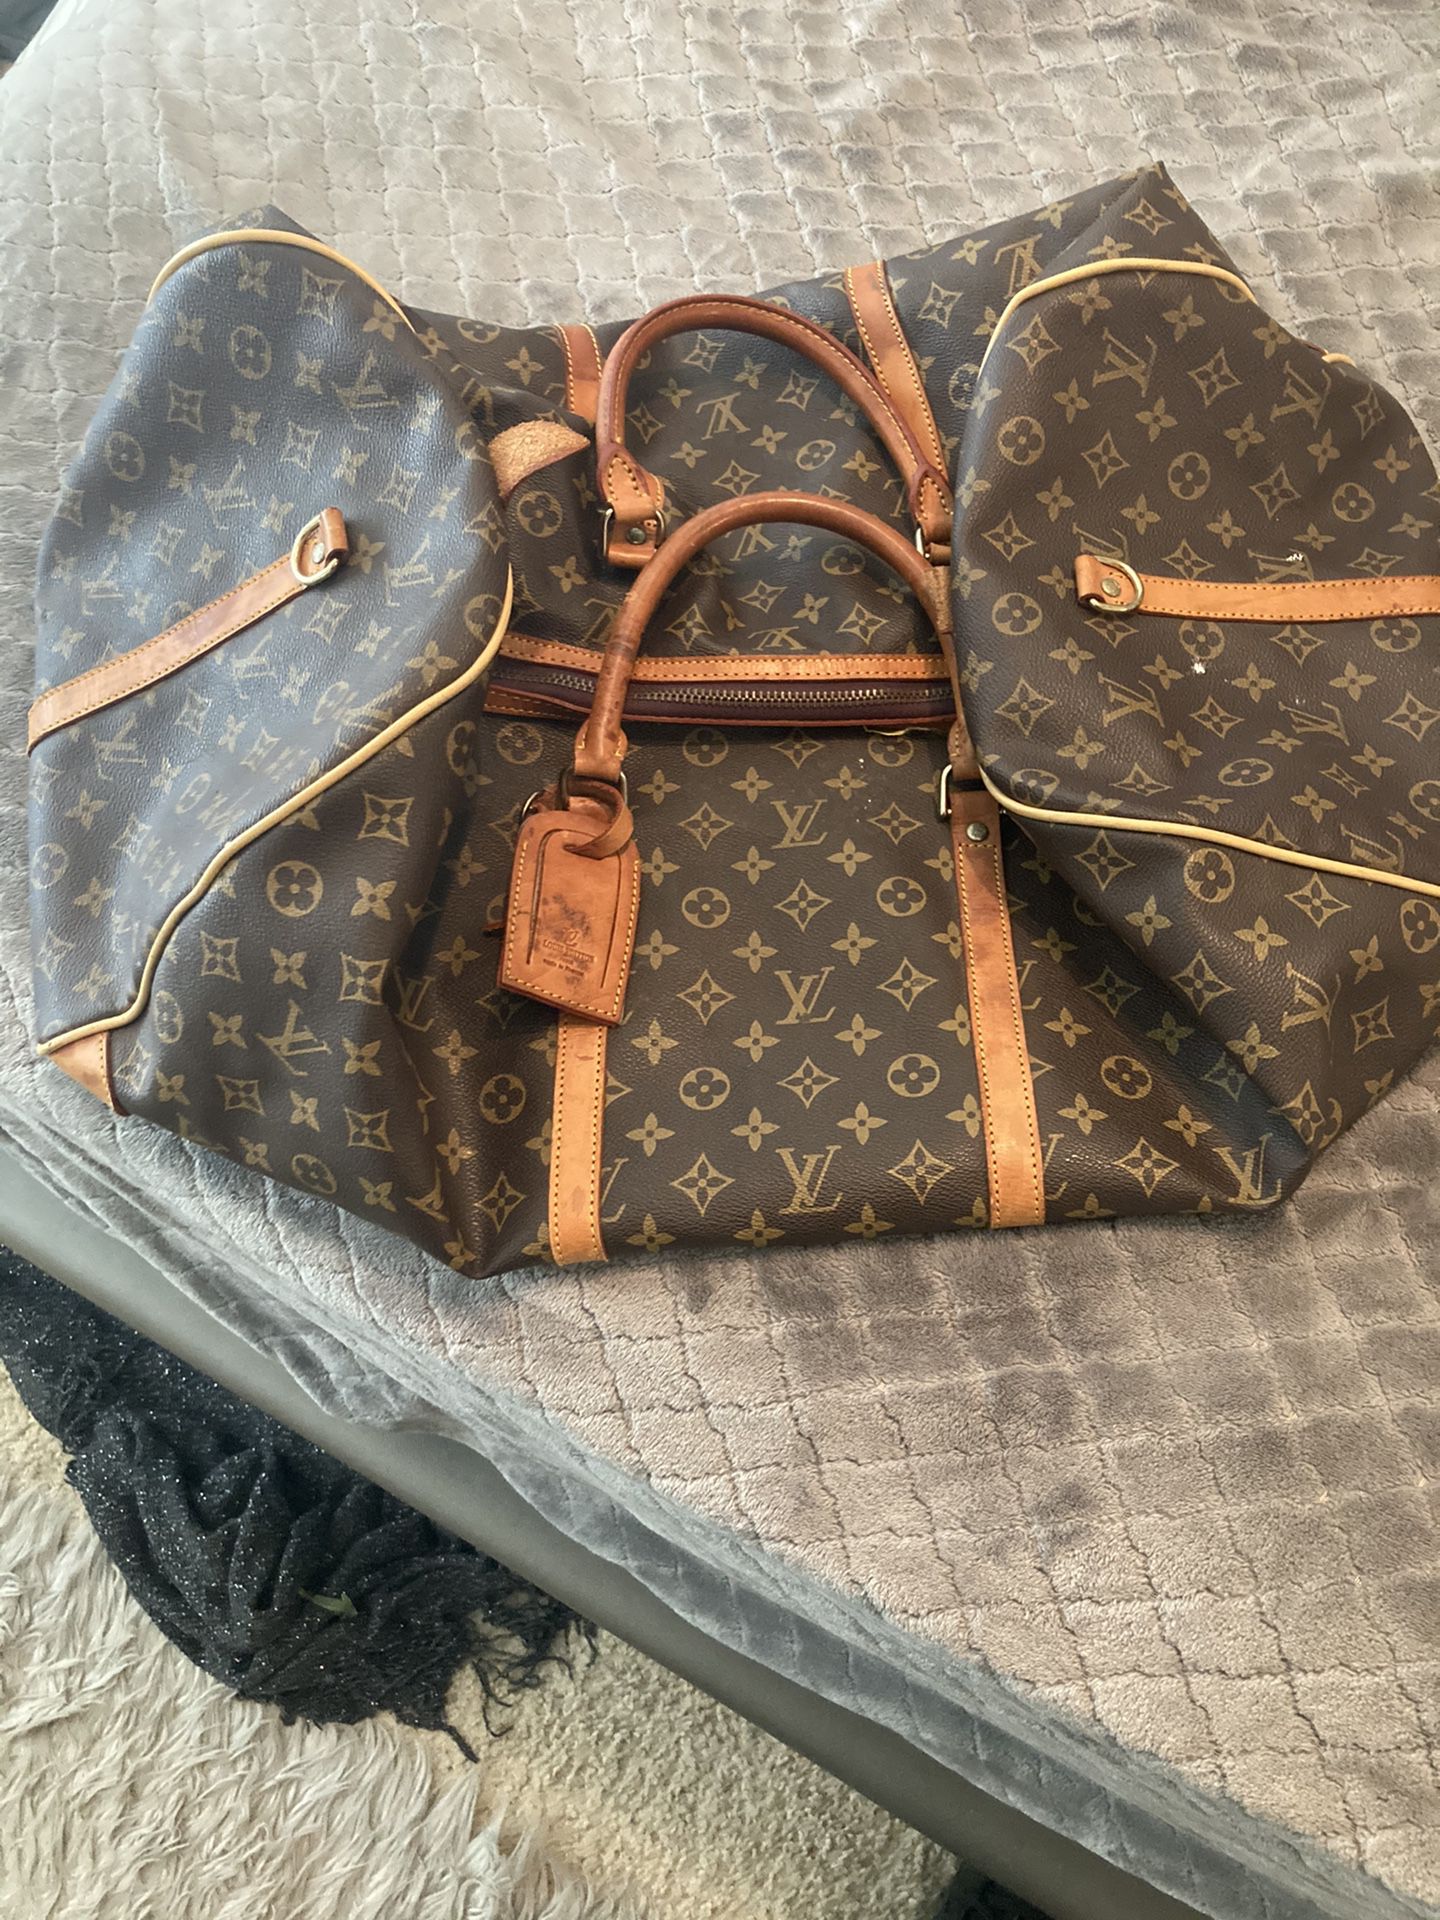 Louis Vuitton Petite Malle Bags for Sale in Tinton Falls, NJ - OfferUp